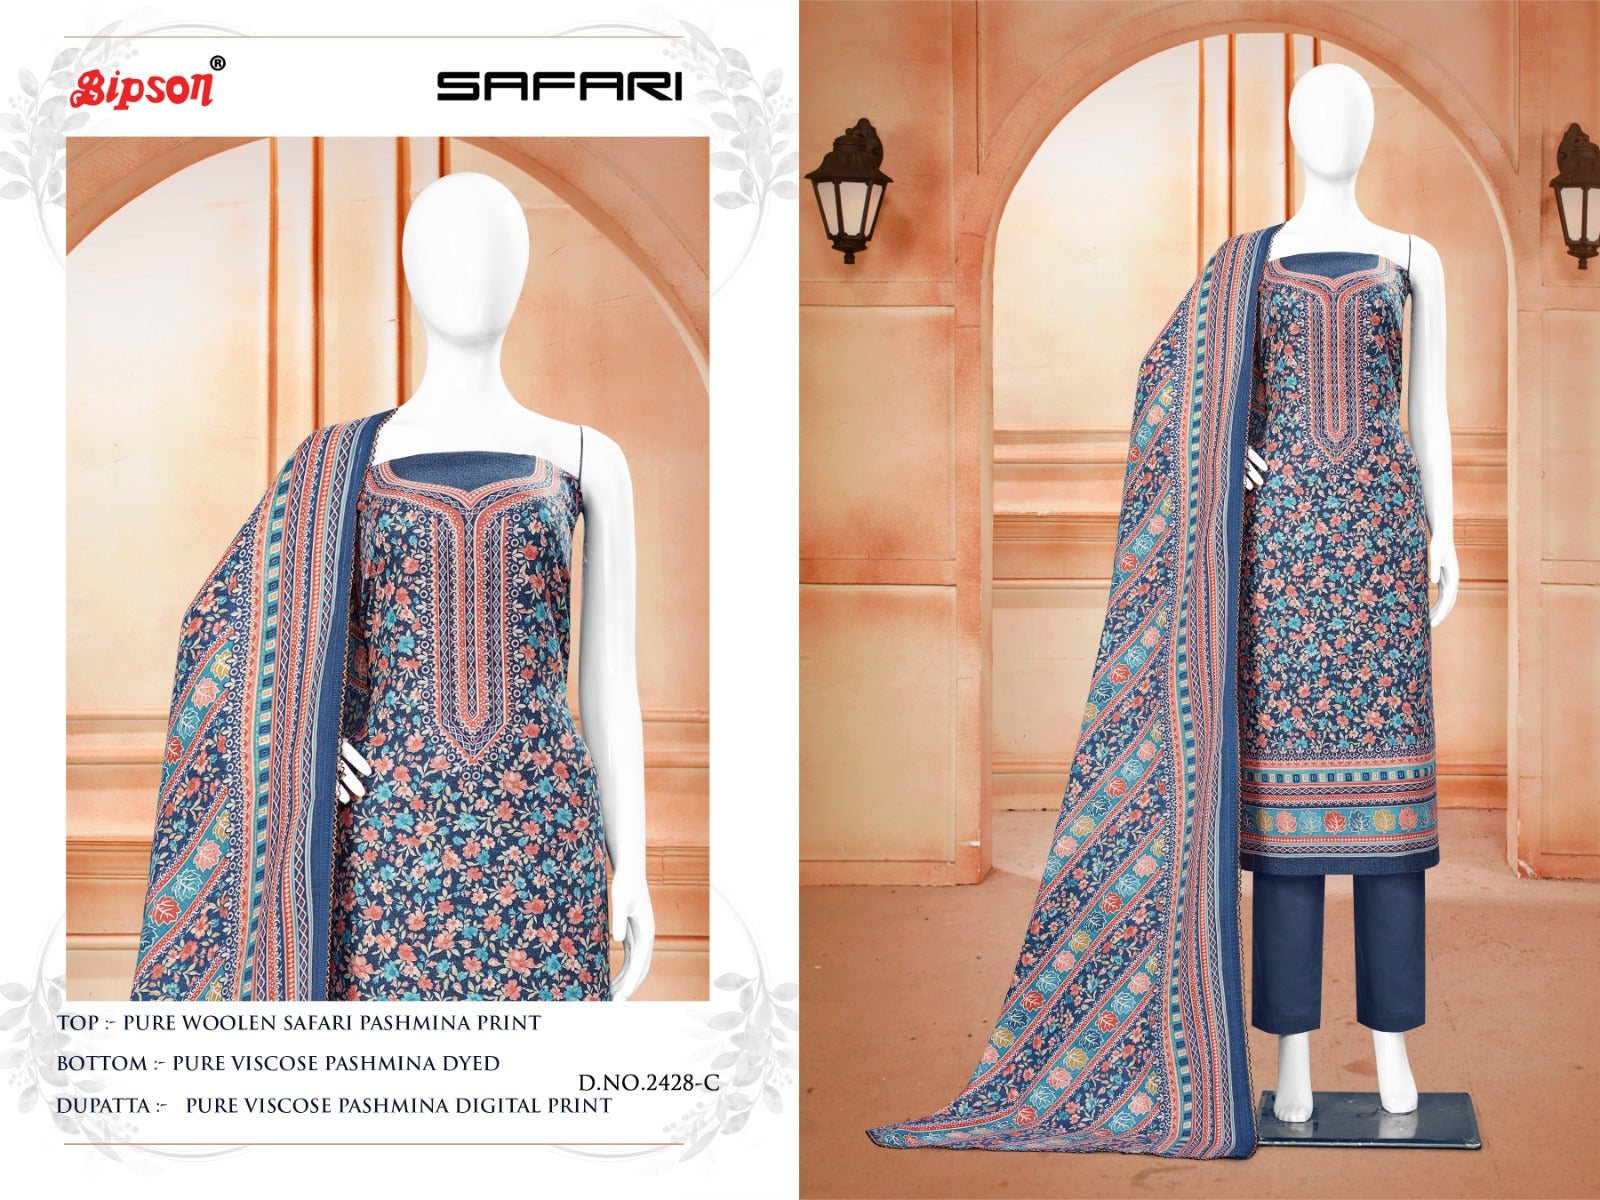 Safari-2428 Bipson Prints Woolen Pashmina Suits